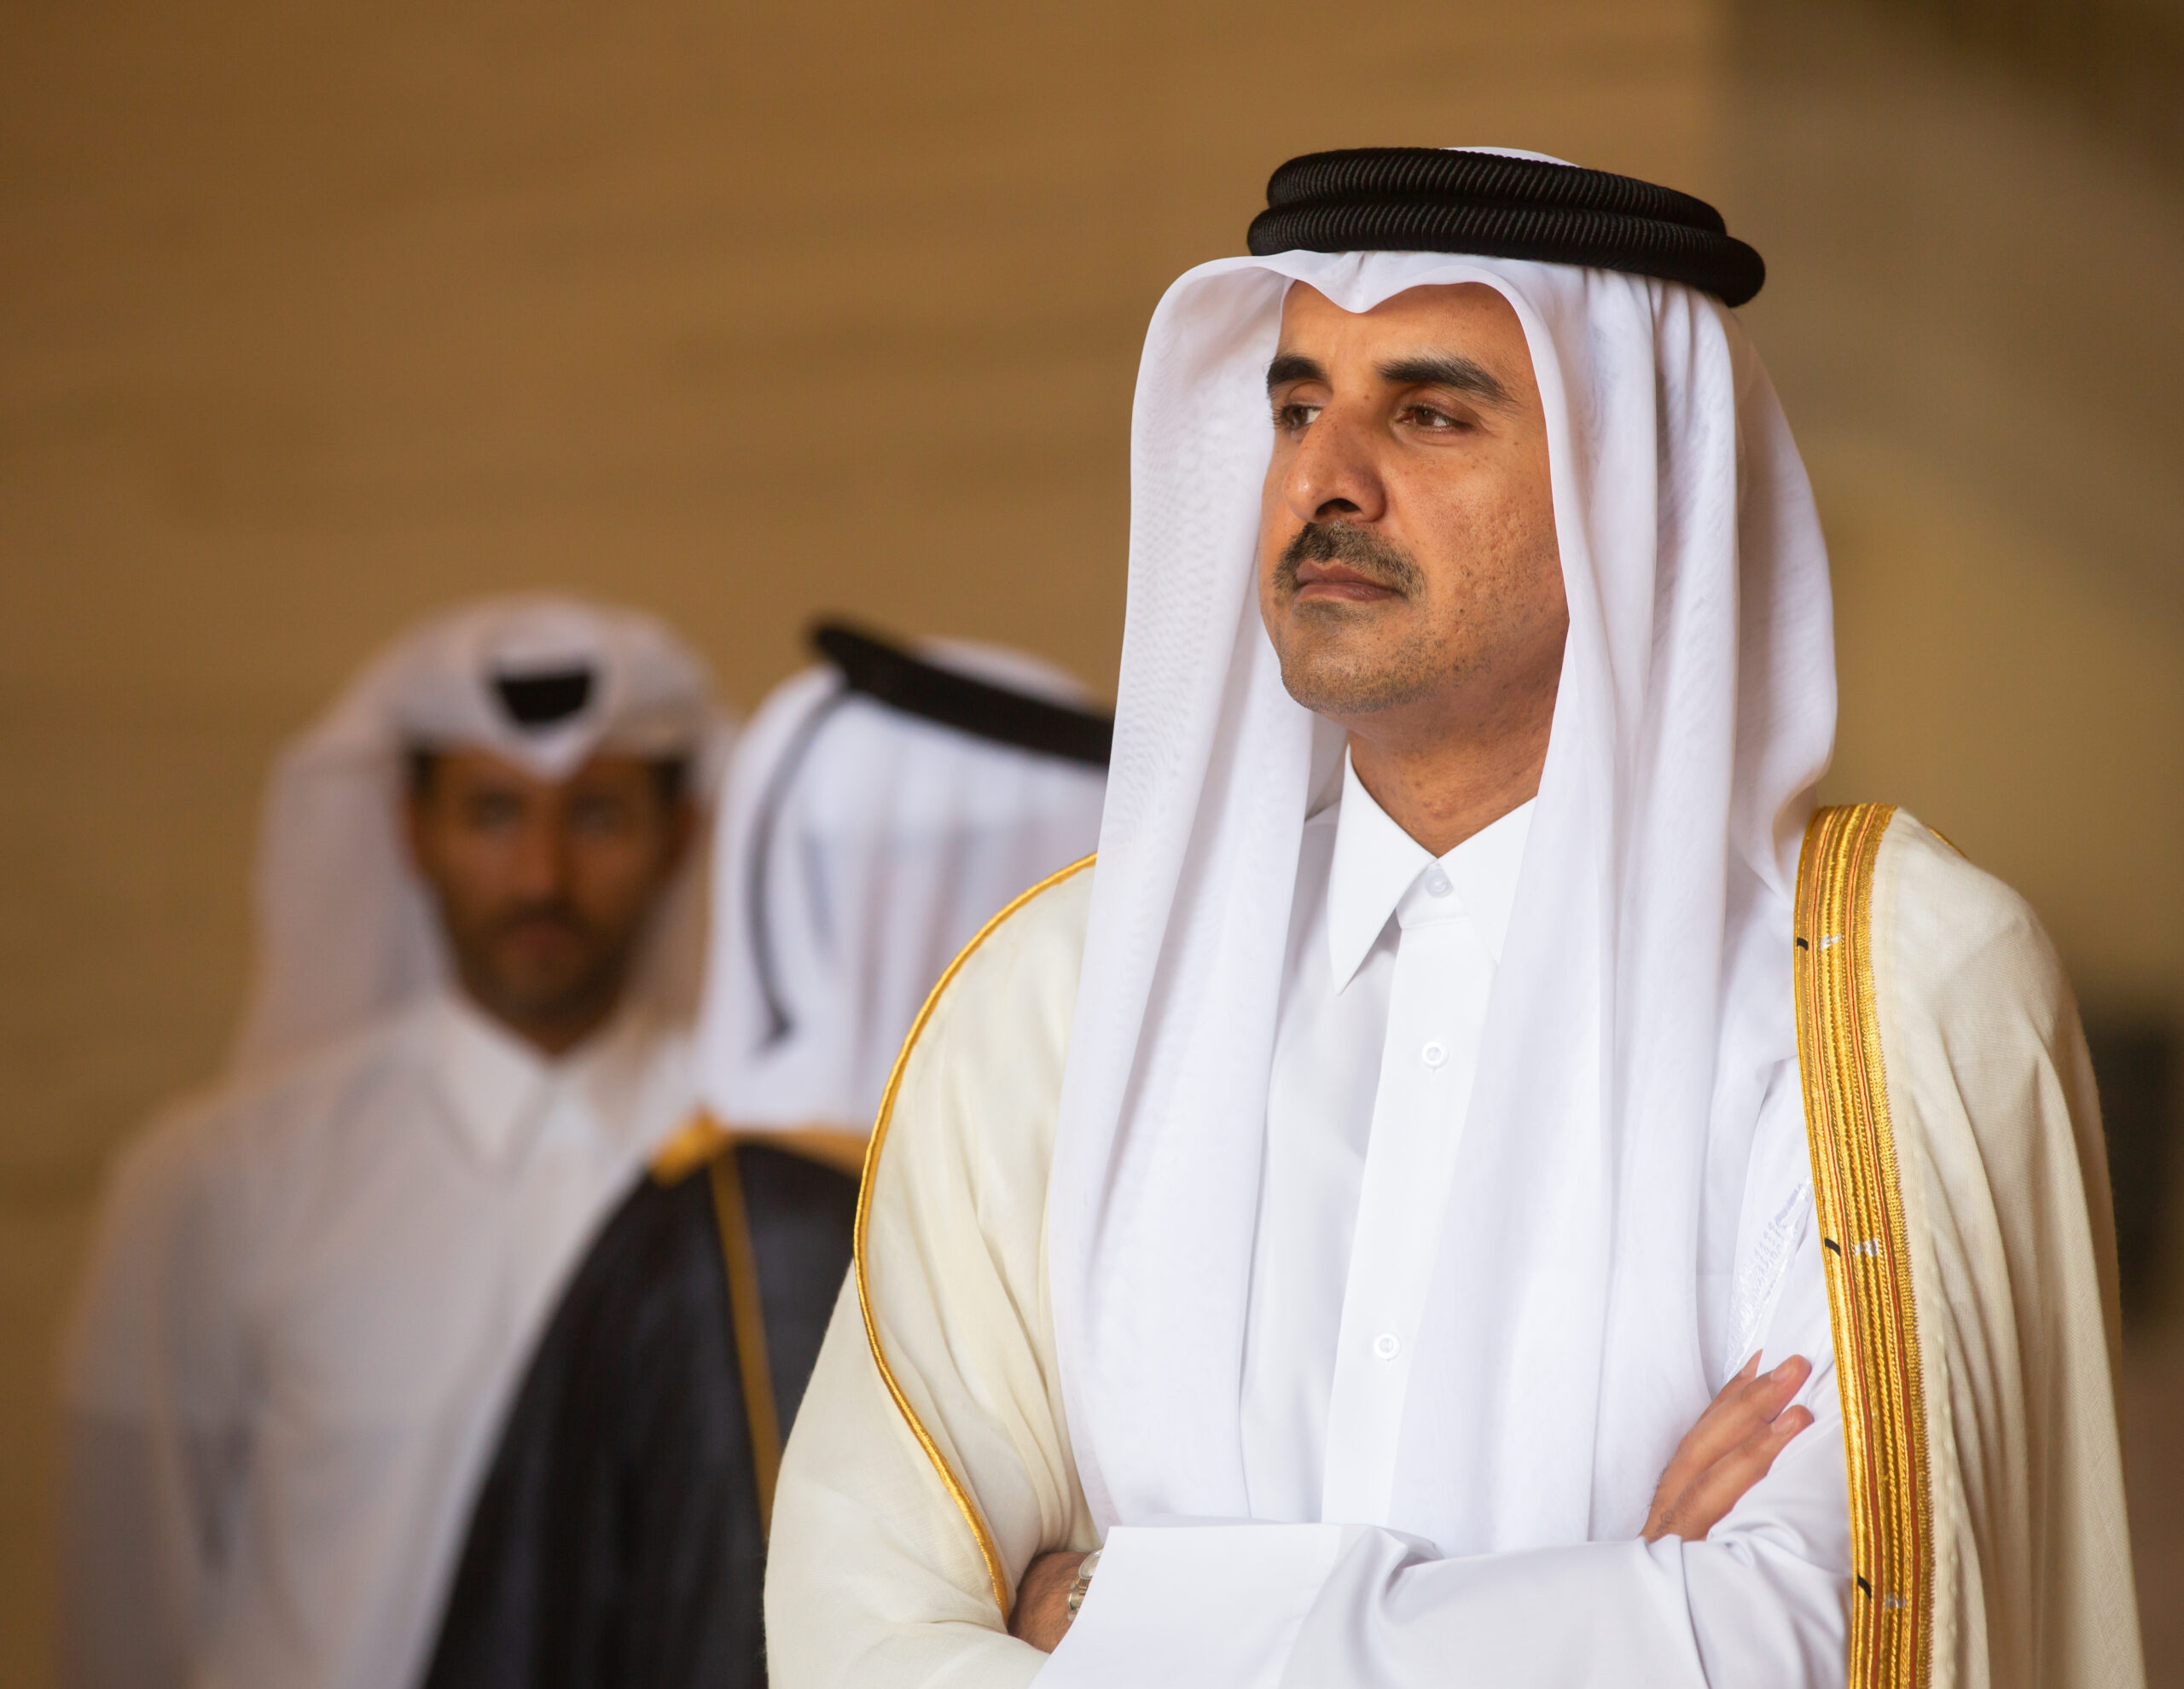 As Qatar Mediates the World’s Disputes, Its U.S. Lobbying Sows Legal Problems